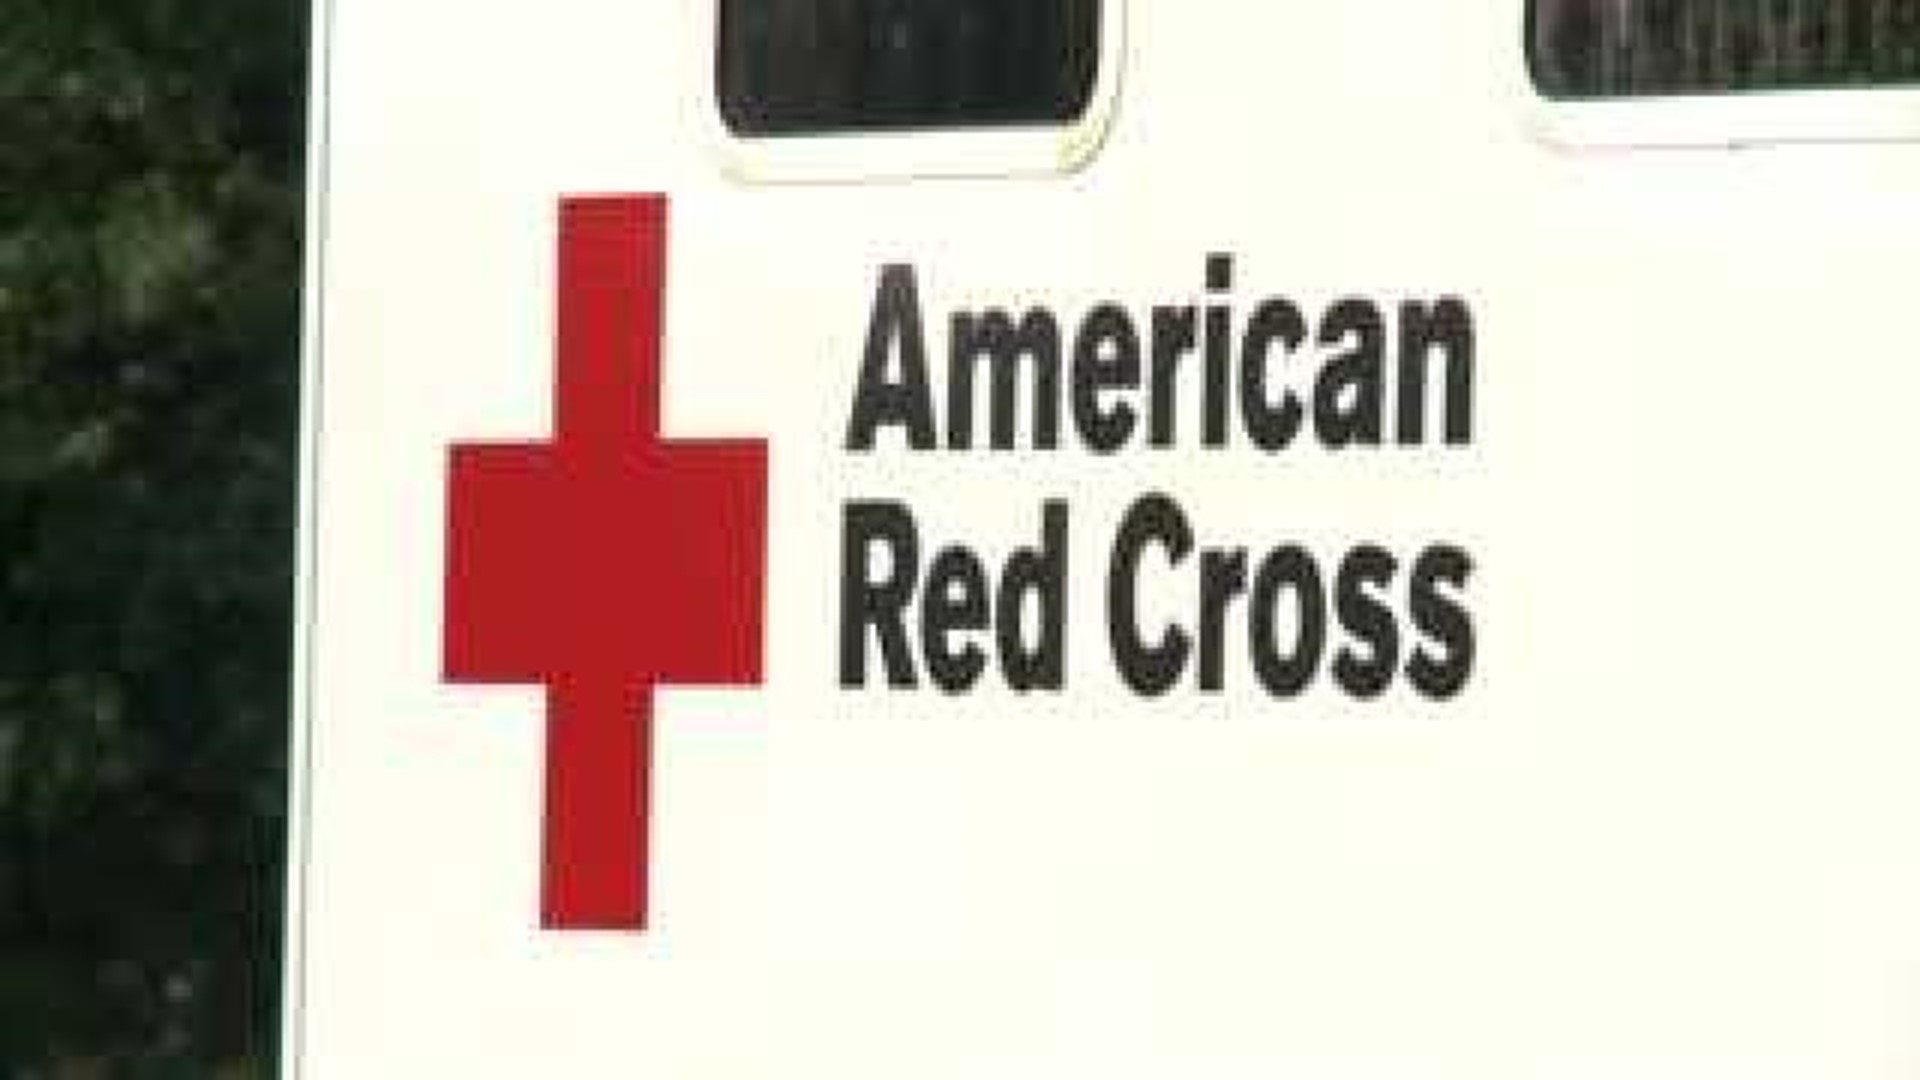 Red Cross Award